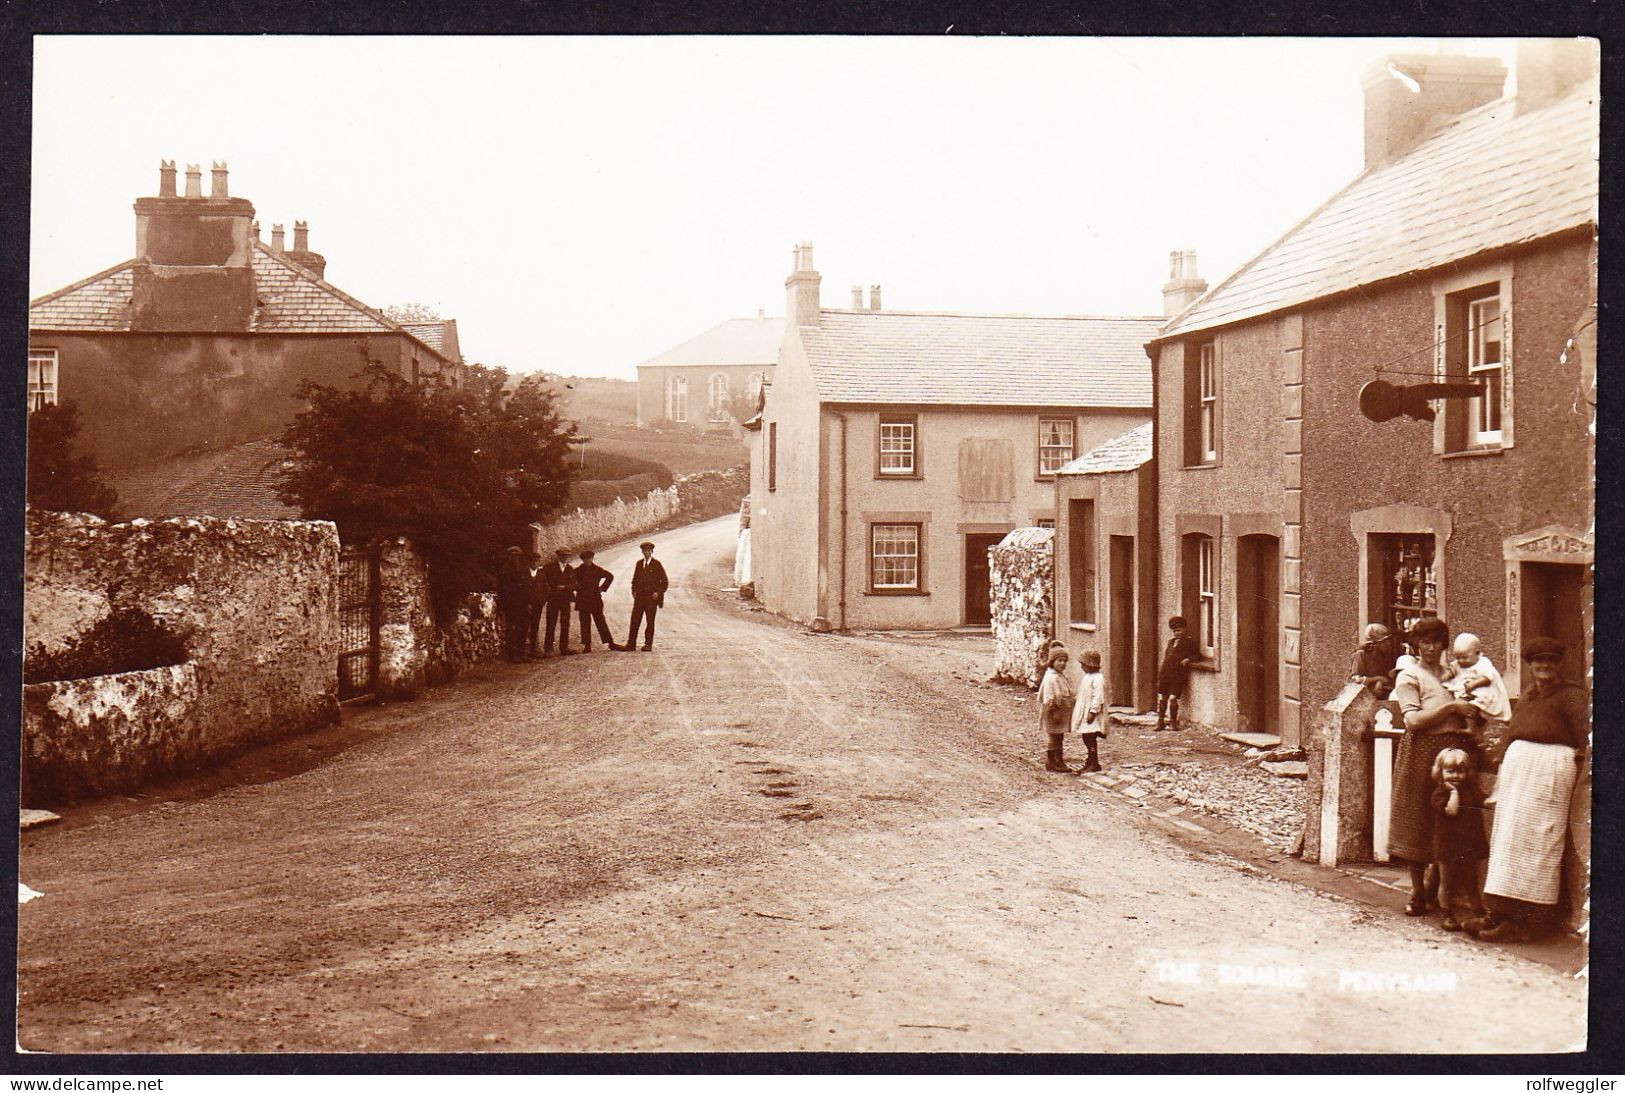 Um 1910 Ungelaufene Foto AK: The Square, Belebt, Penysarn. Gute Erhaltung - Anglesey